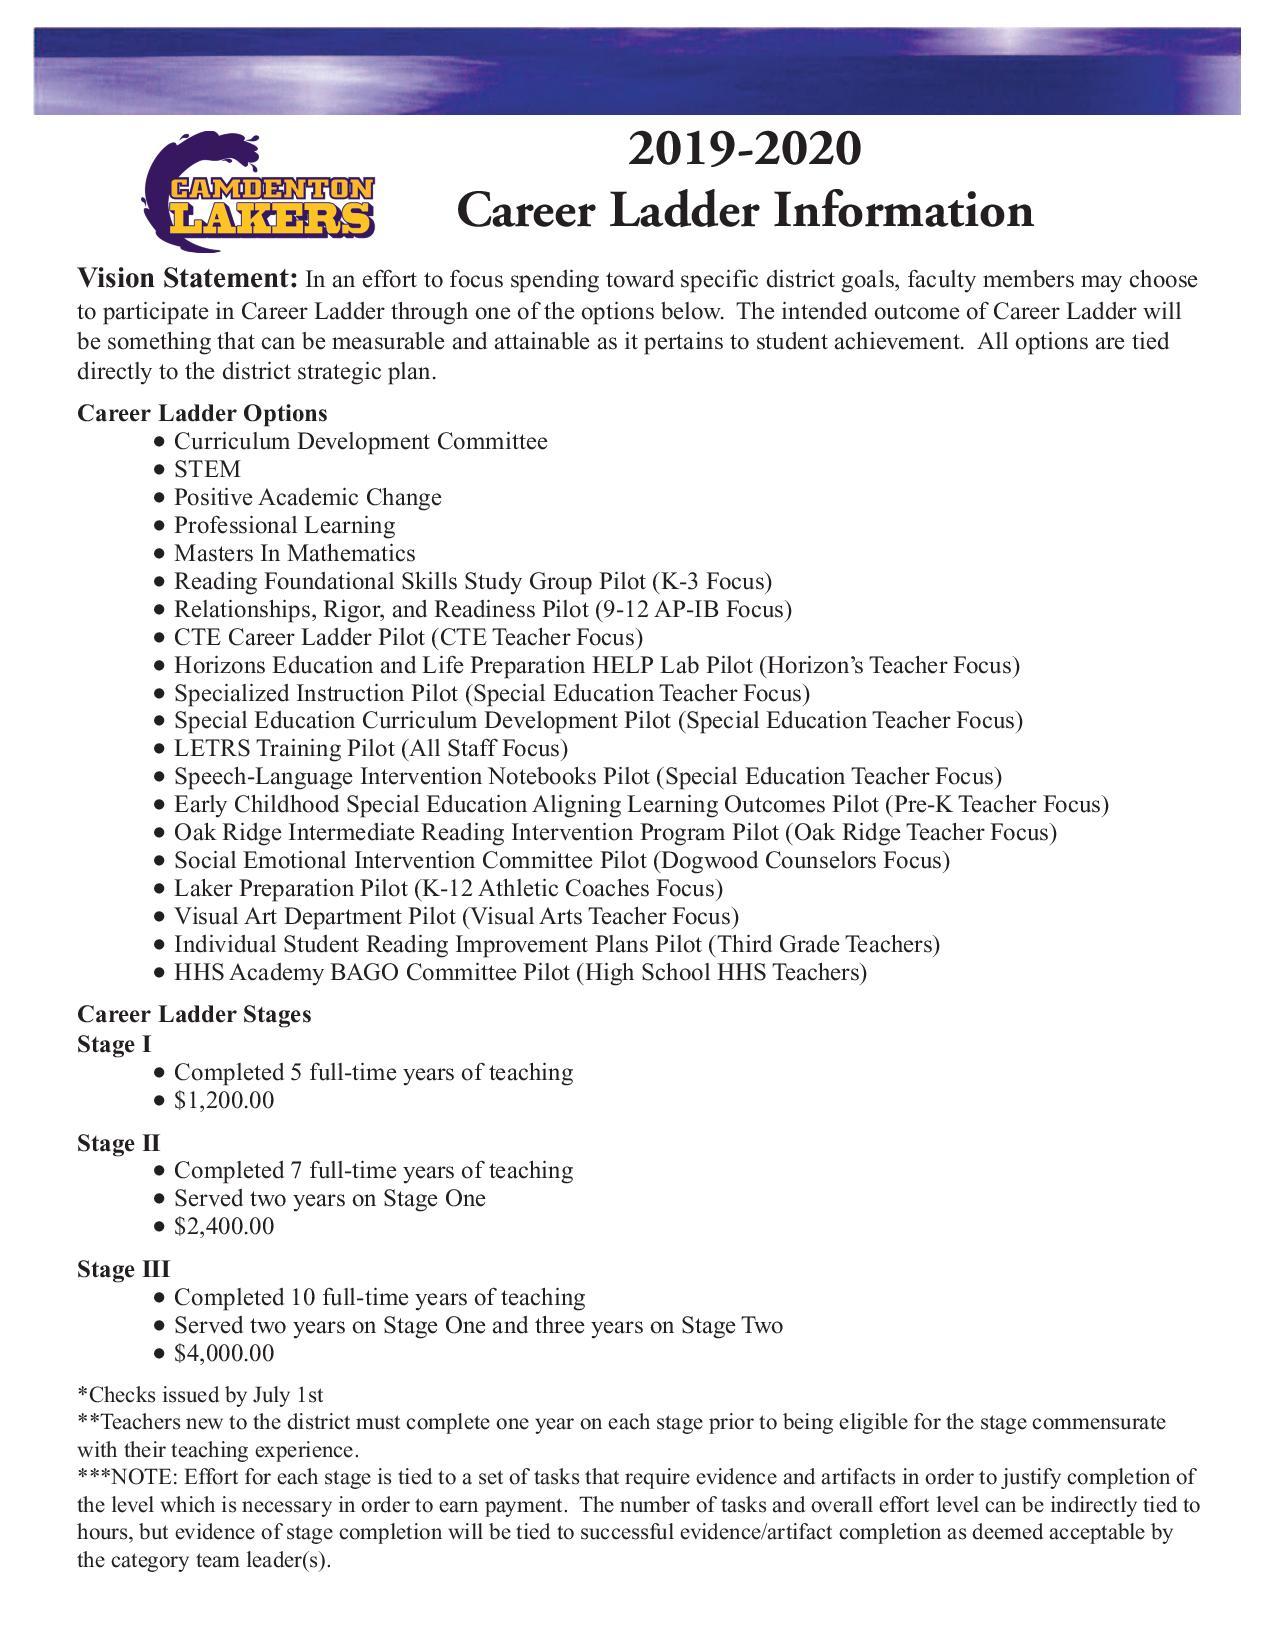 Career Ladder page 2